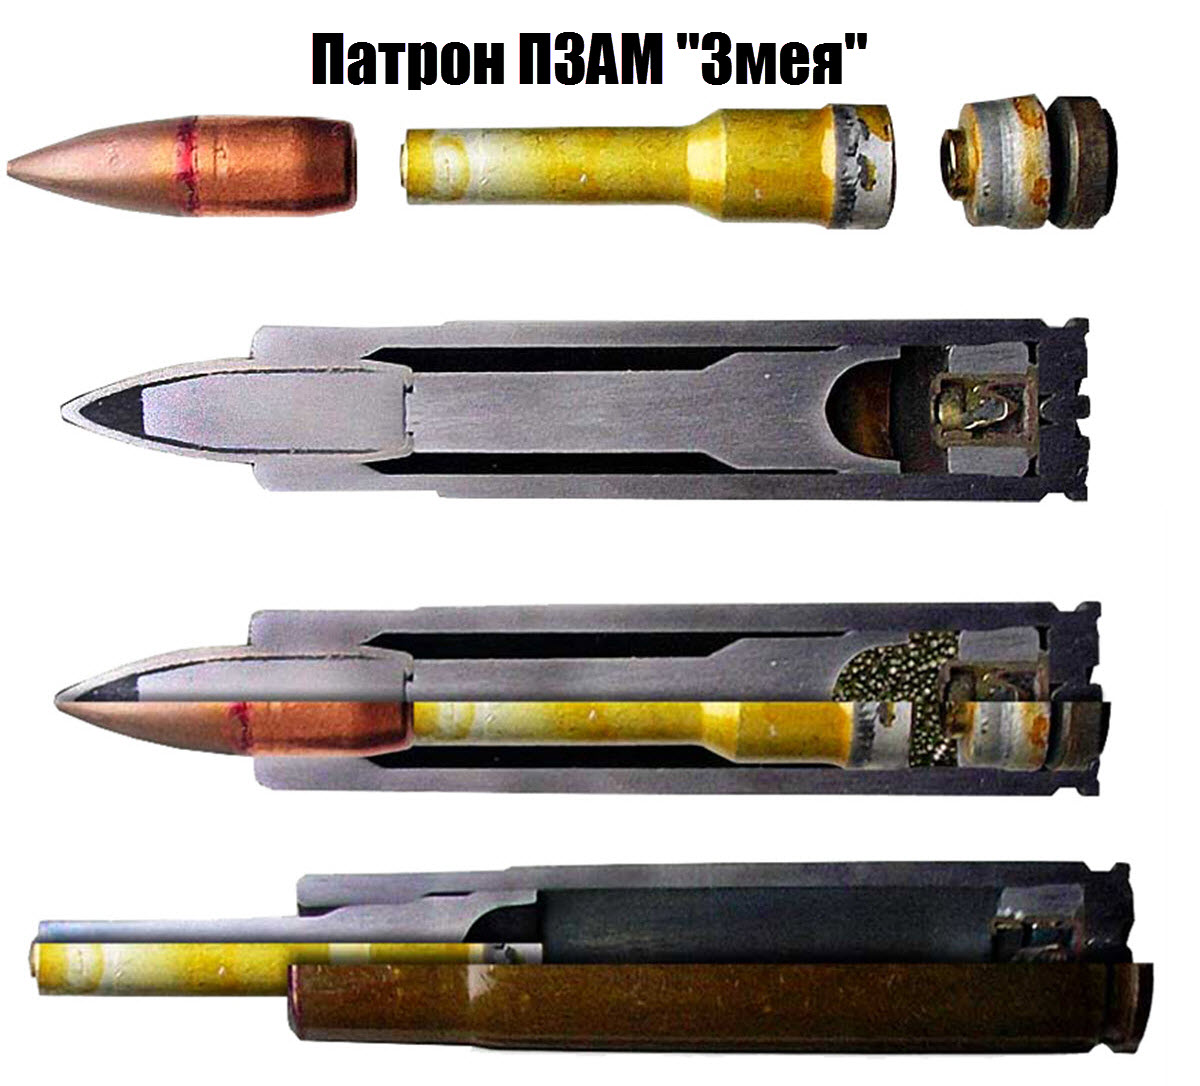 Пистолет С-4 (С-4М)